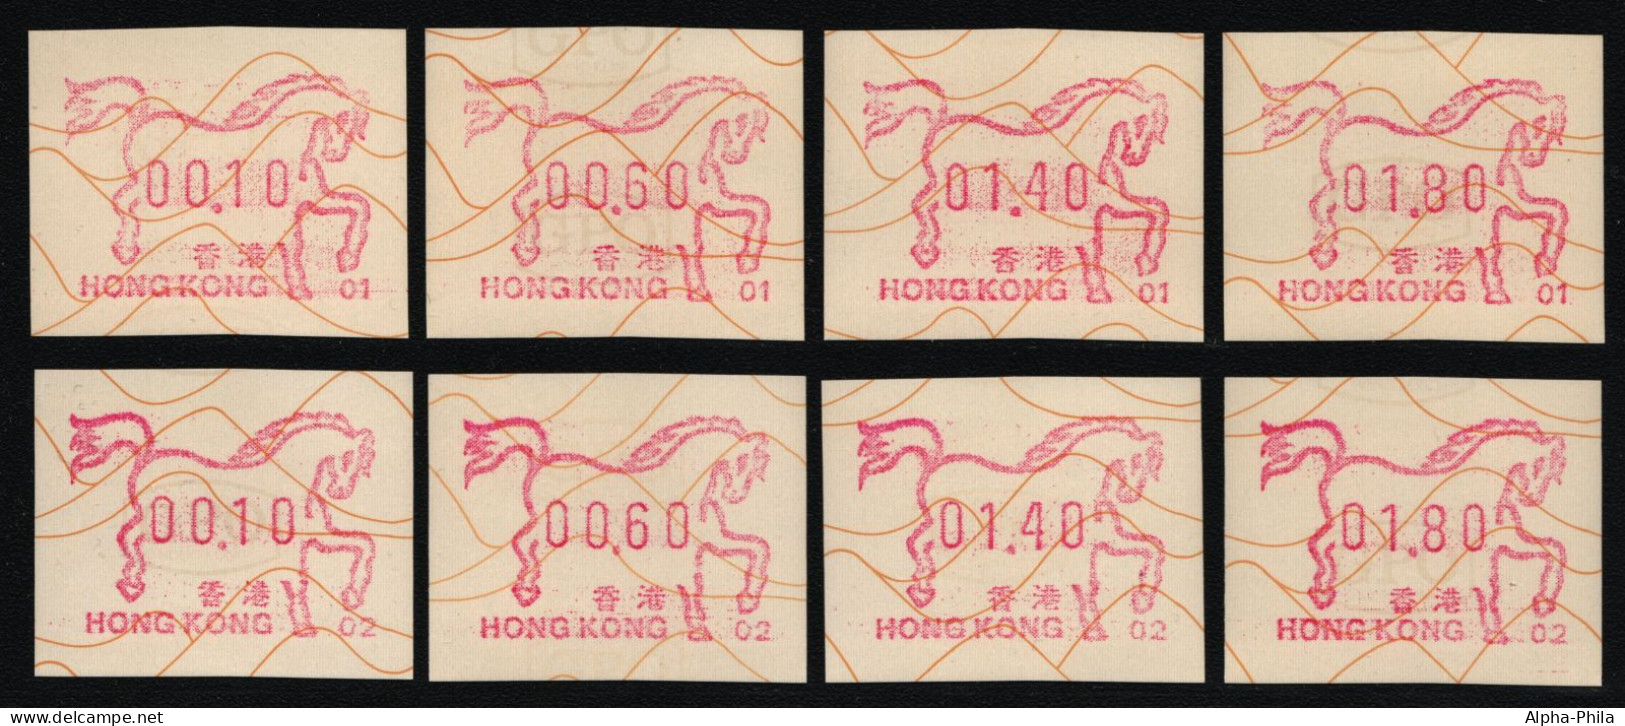 Hongkong 1990 - Mi-Nr. ATM 5 ** - MNH - Automat 01 & 02 - Je 4 Wertstufen - Distributeurs